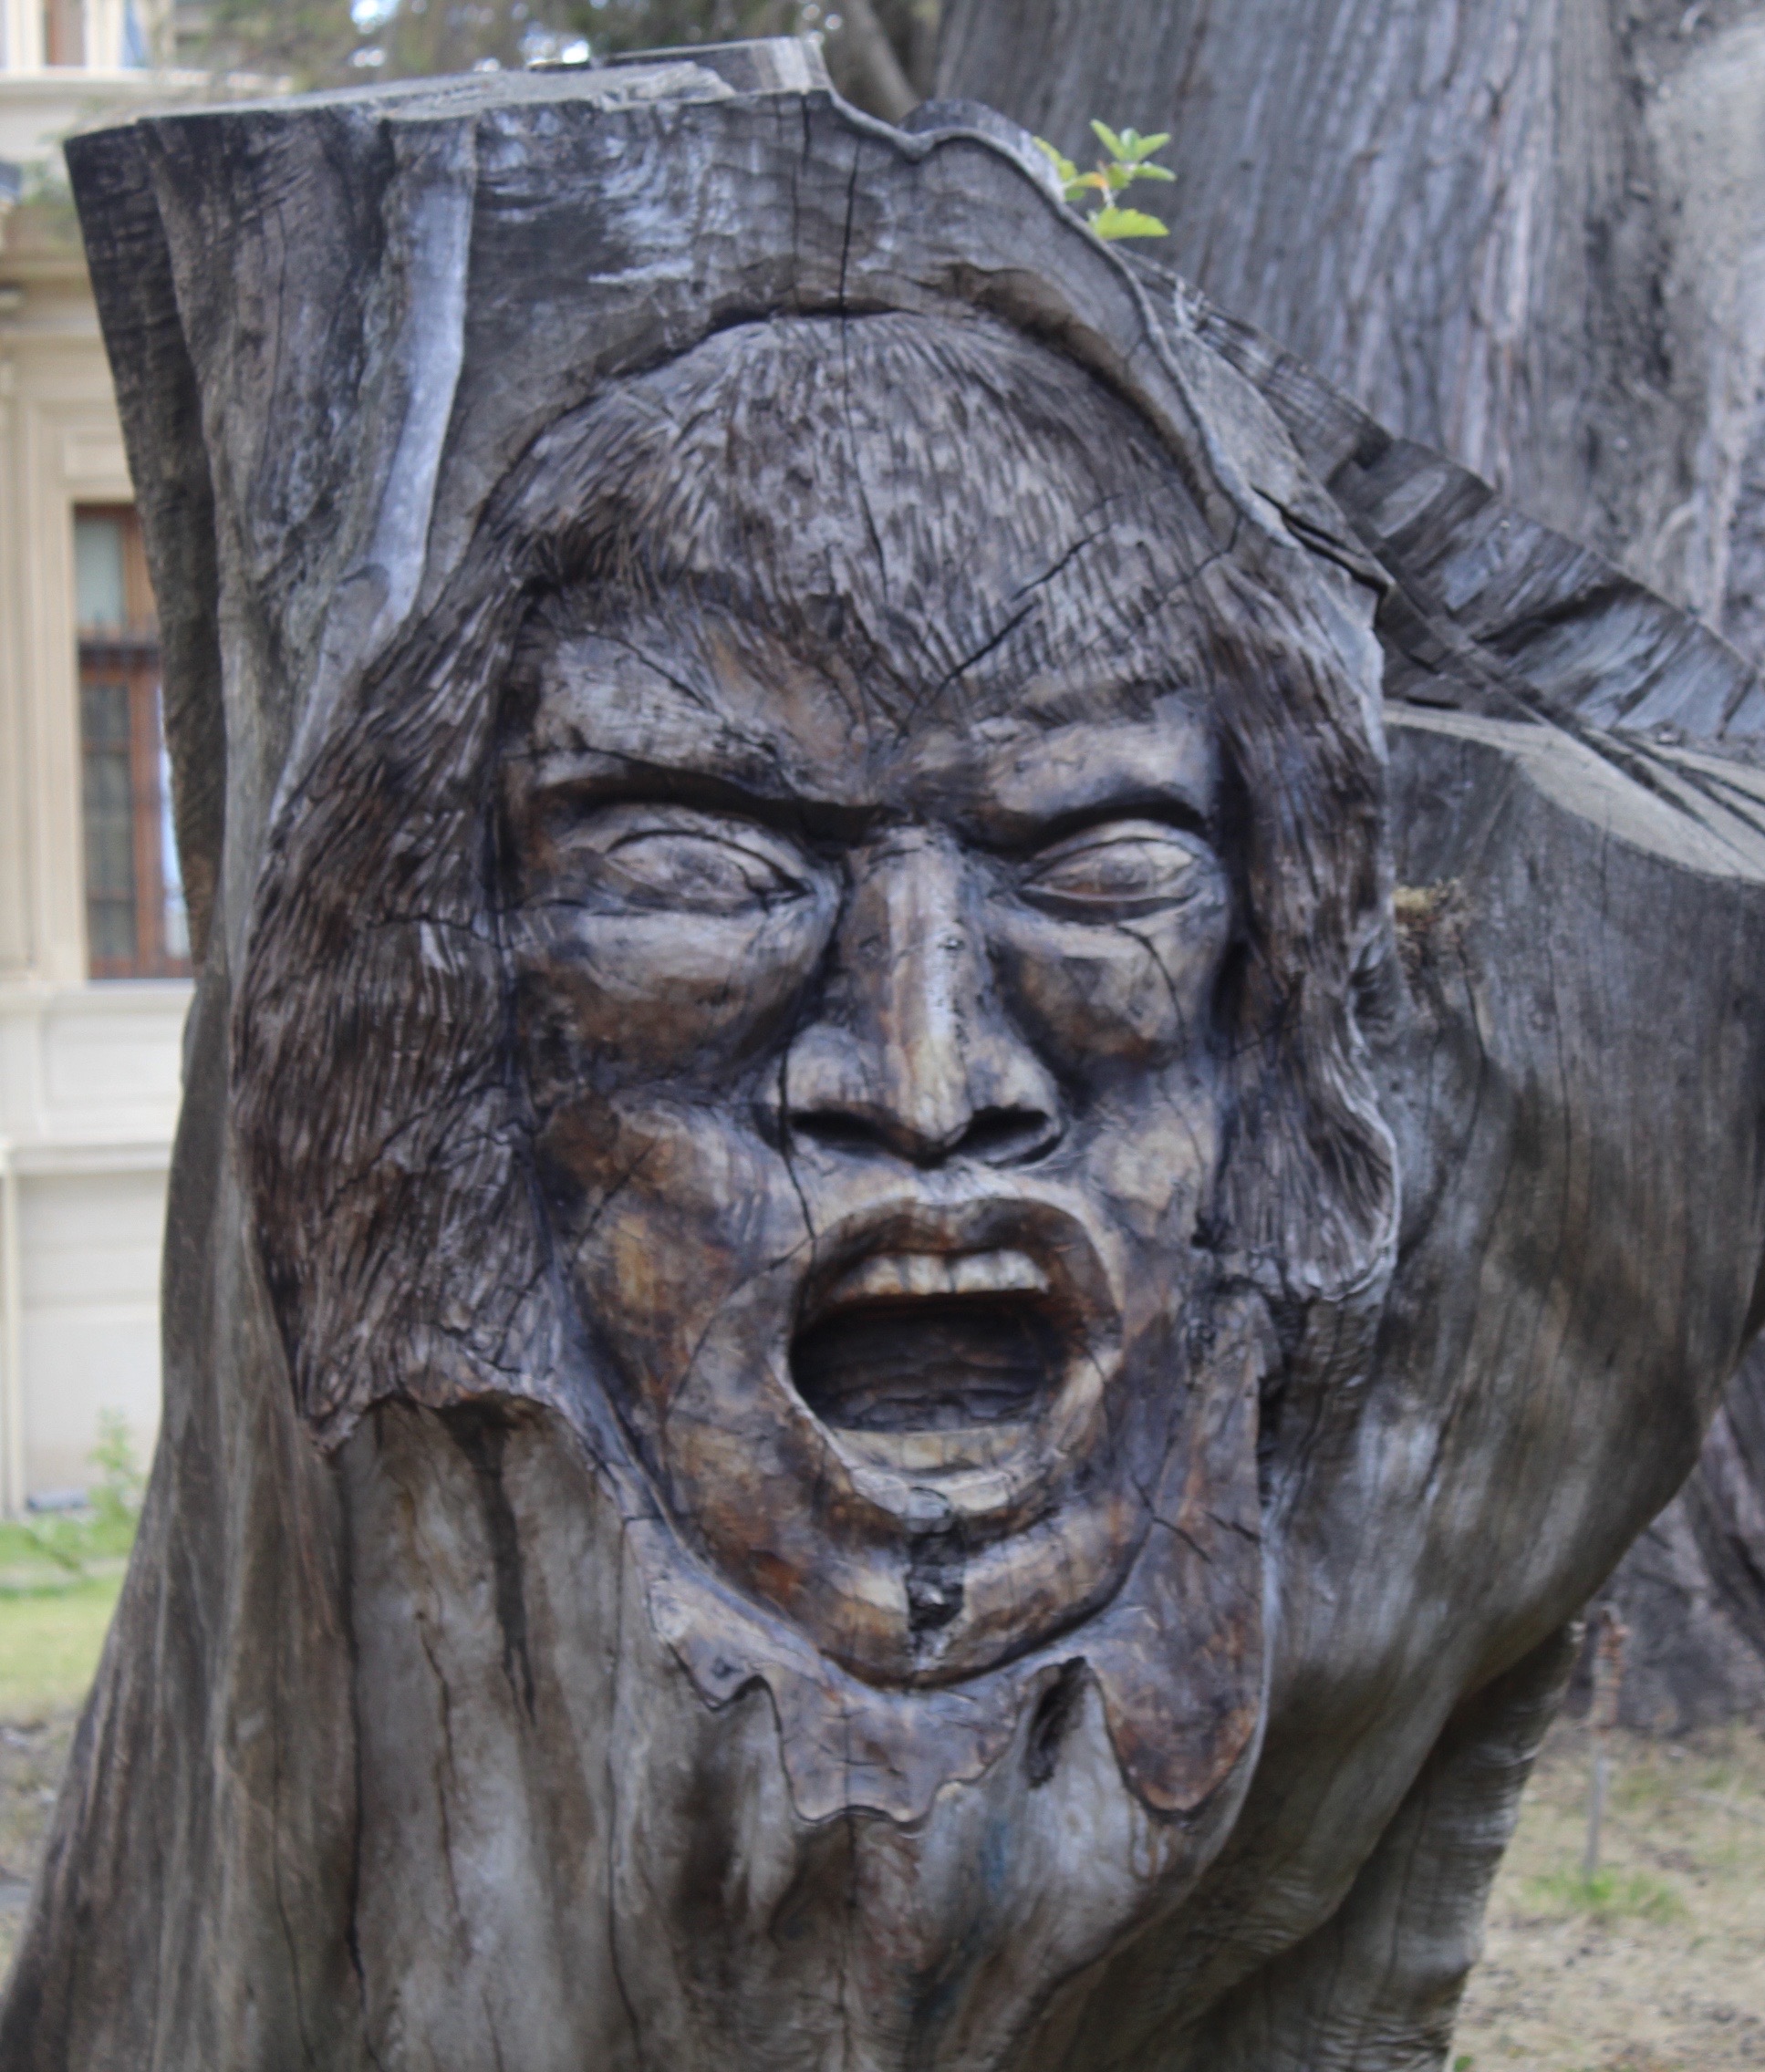 Tree carving art in Punta Arenas Chile, Feb. 28, 2020